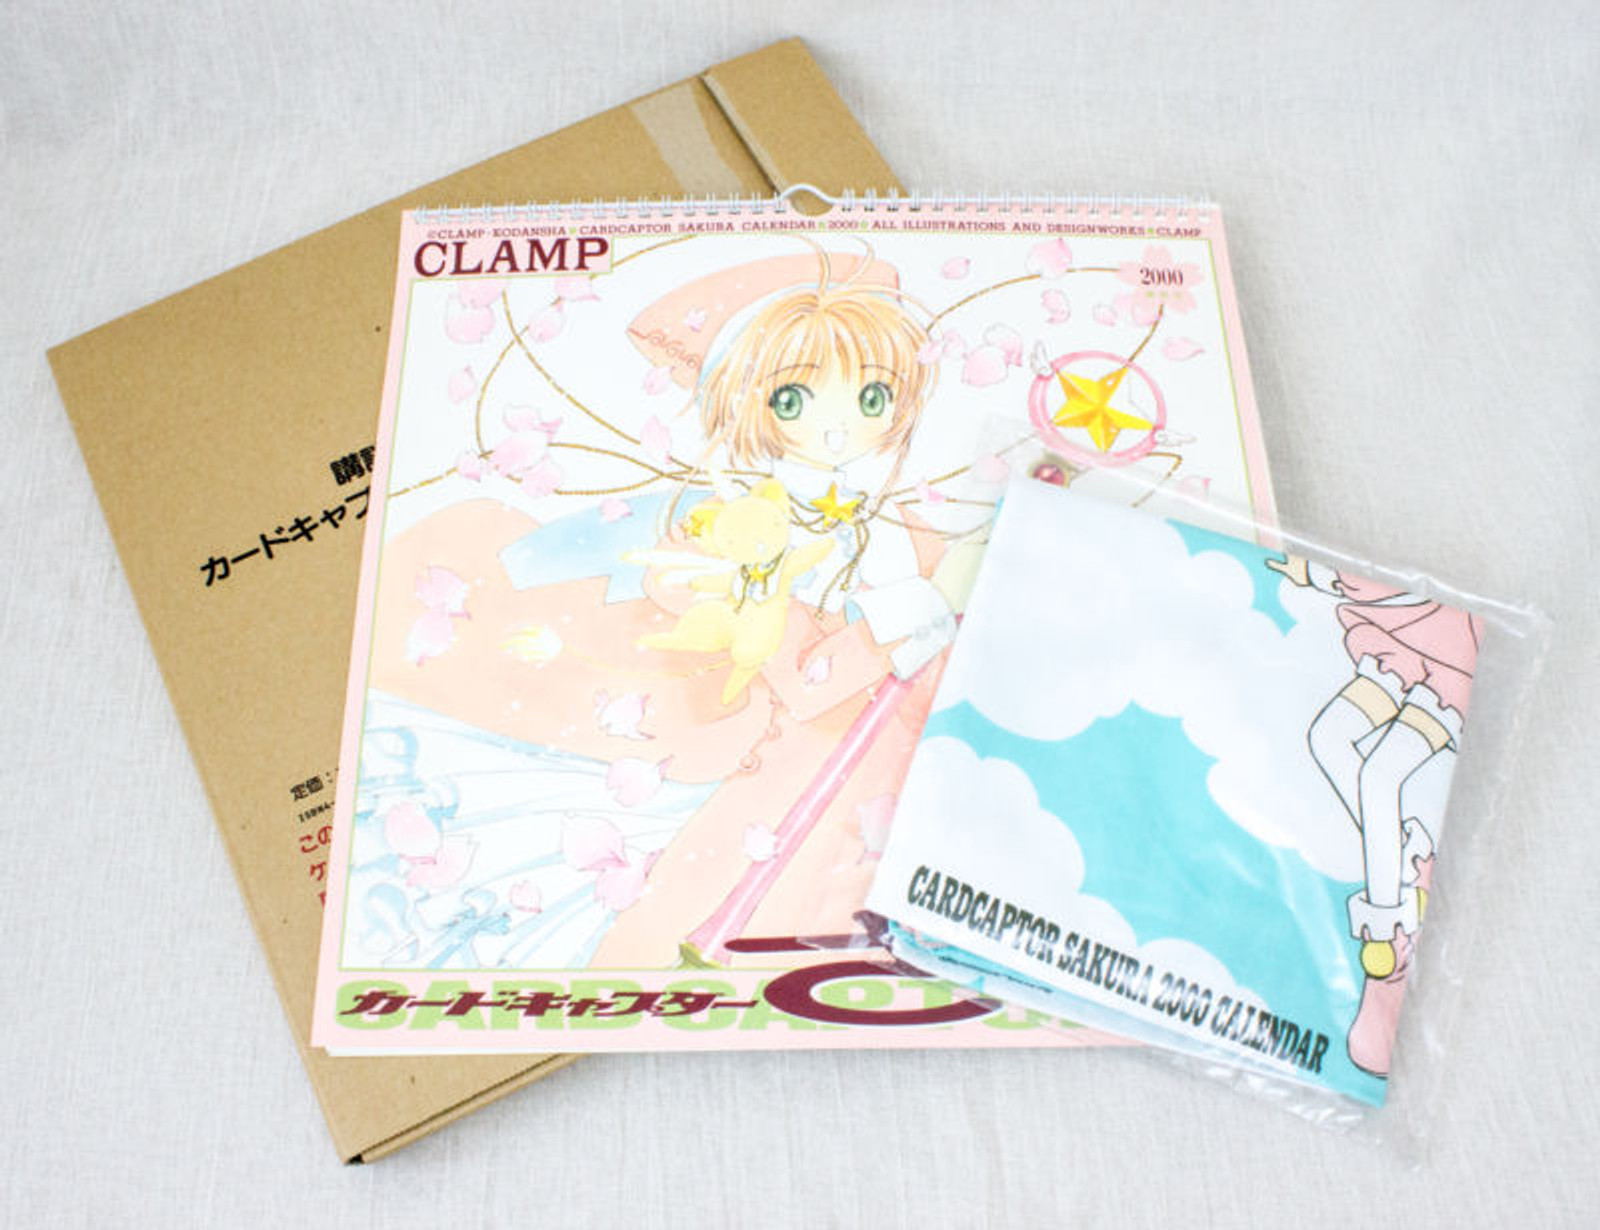 Cardcaptor Sakura Kodansha Calendar 2000 + Drawstring Bag CLAMP JAPAN ANIME MANGA